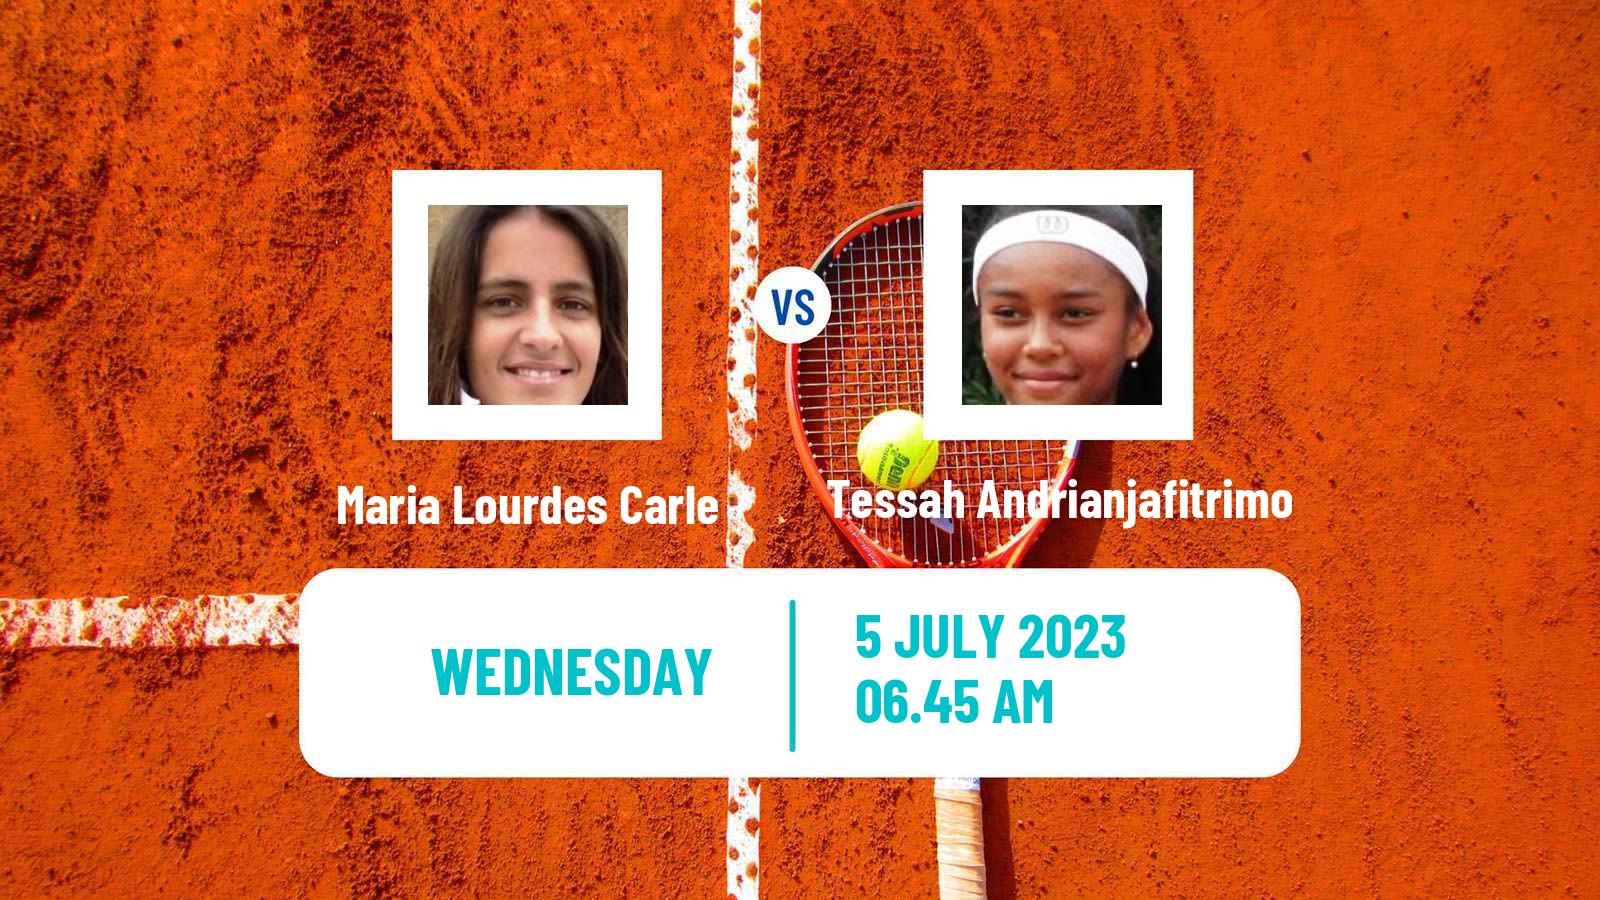 Tennis ITF W60 Montpellier Women Maria Lourdes Carle - Tessah Andrianjafitrimo